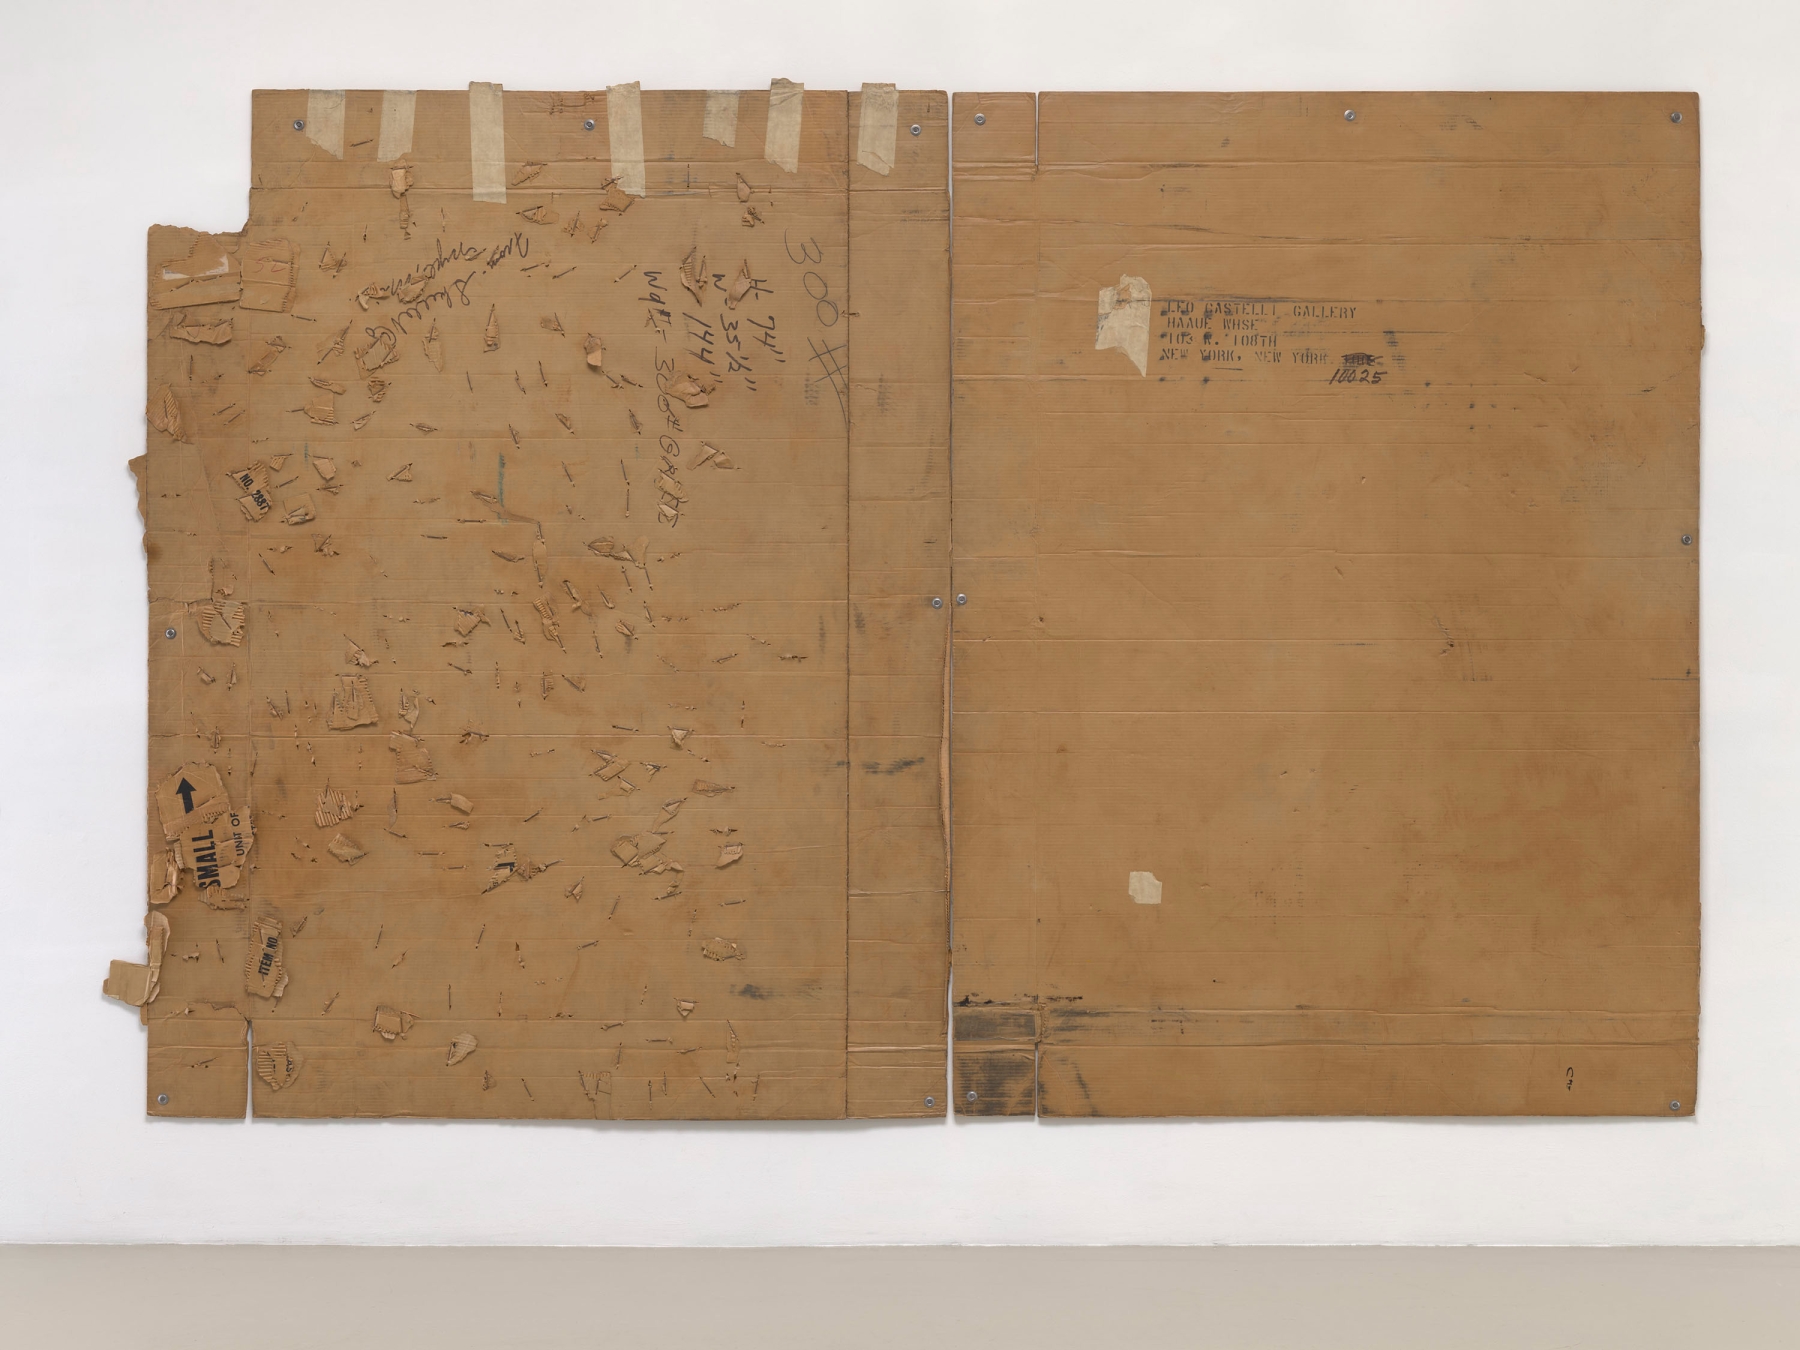 Robert Rauschenberg, Castelli / Small Turtle Bowl (Cardboard), 1971, cardboard and staples on cardboard, 94 &frac12;&nbsp; x 145 ⅝ x 2 ⅛ inches (240 x 370 x 5.5 cm)&nbsp;